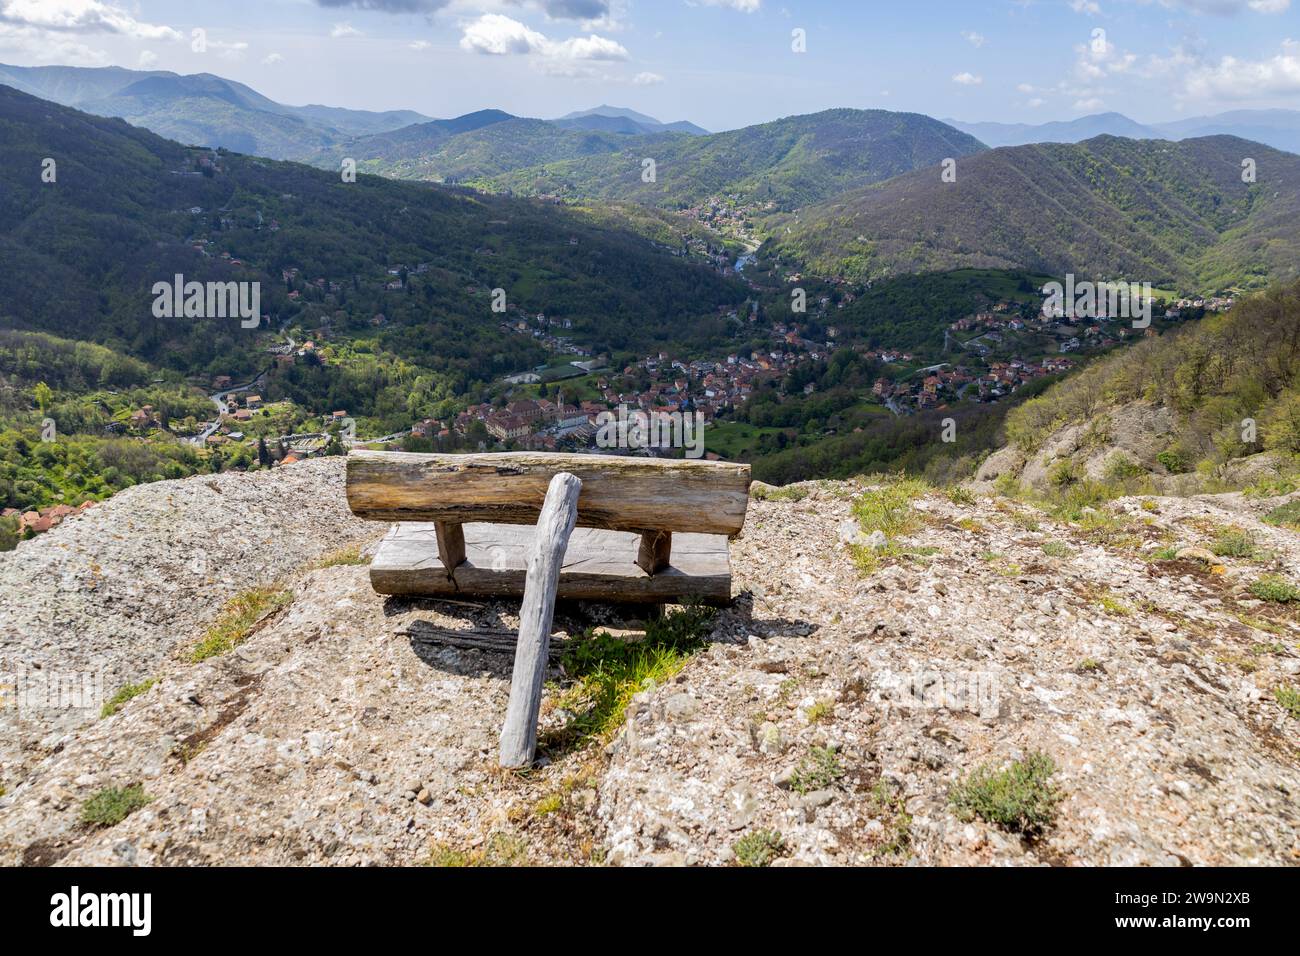 Un banco de madera en la parte superior del monte Pianetto, cerca de Savignone, provincia de Génova, Italia Foto de stock